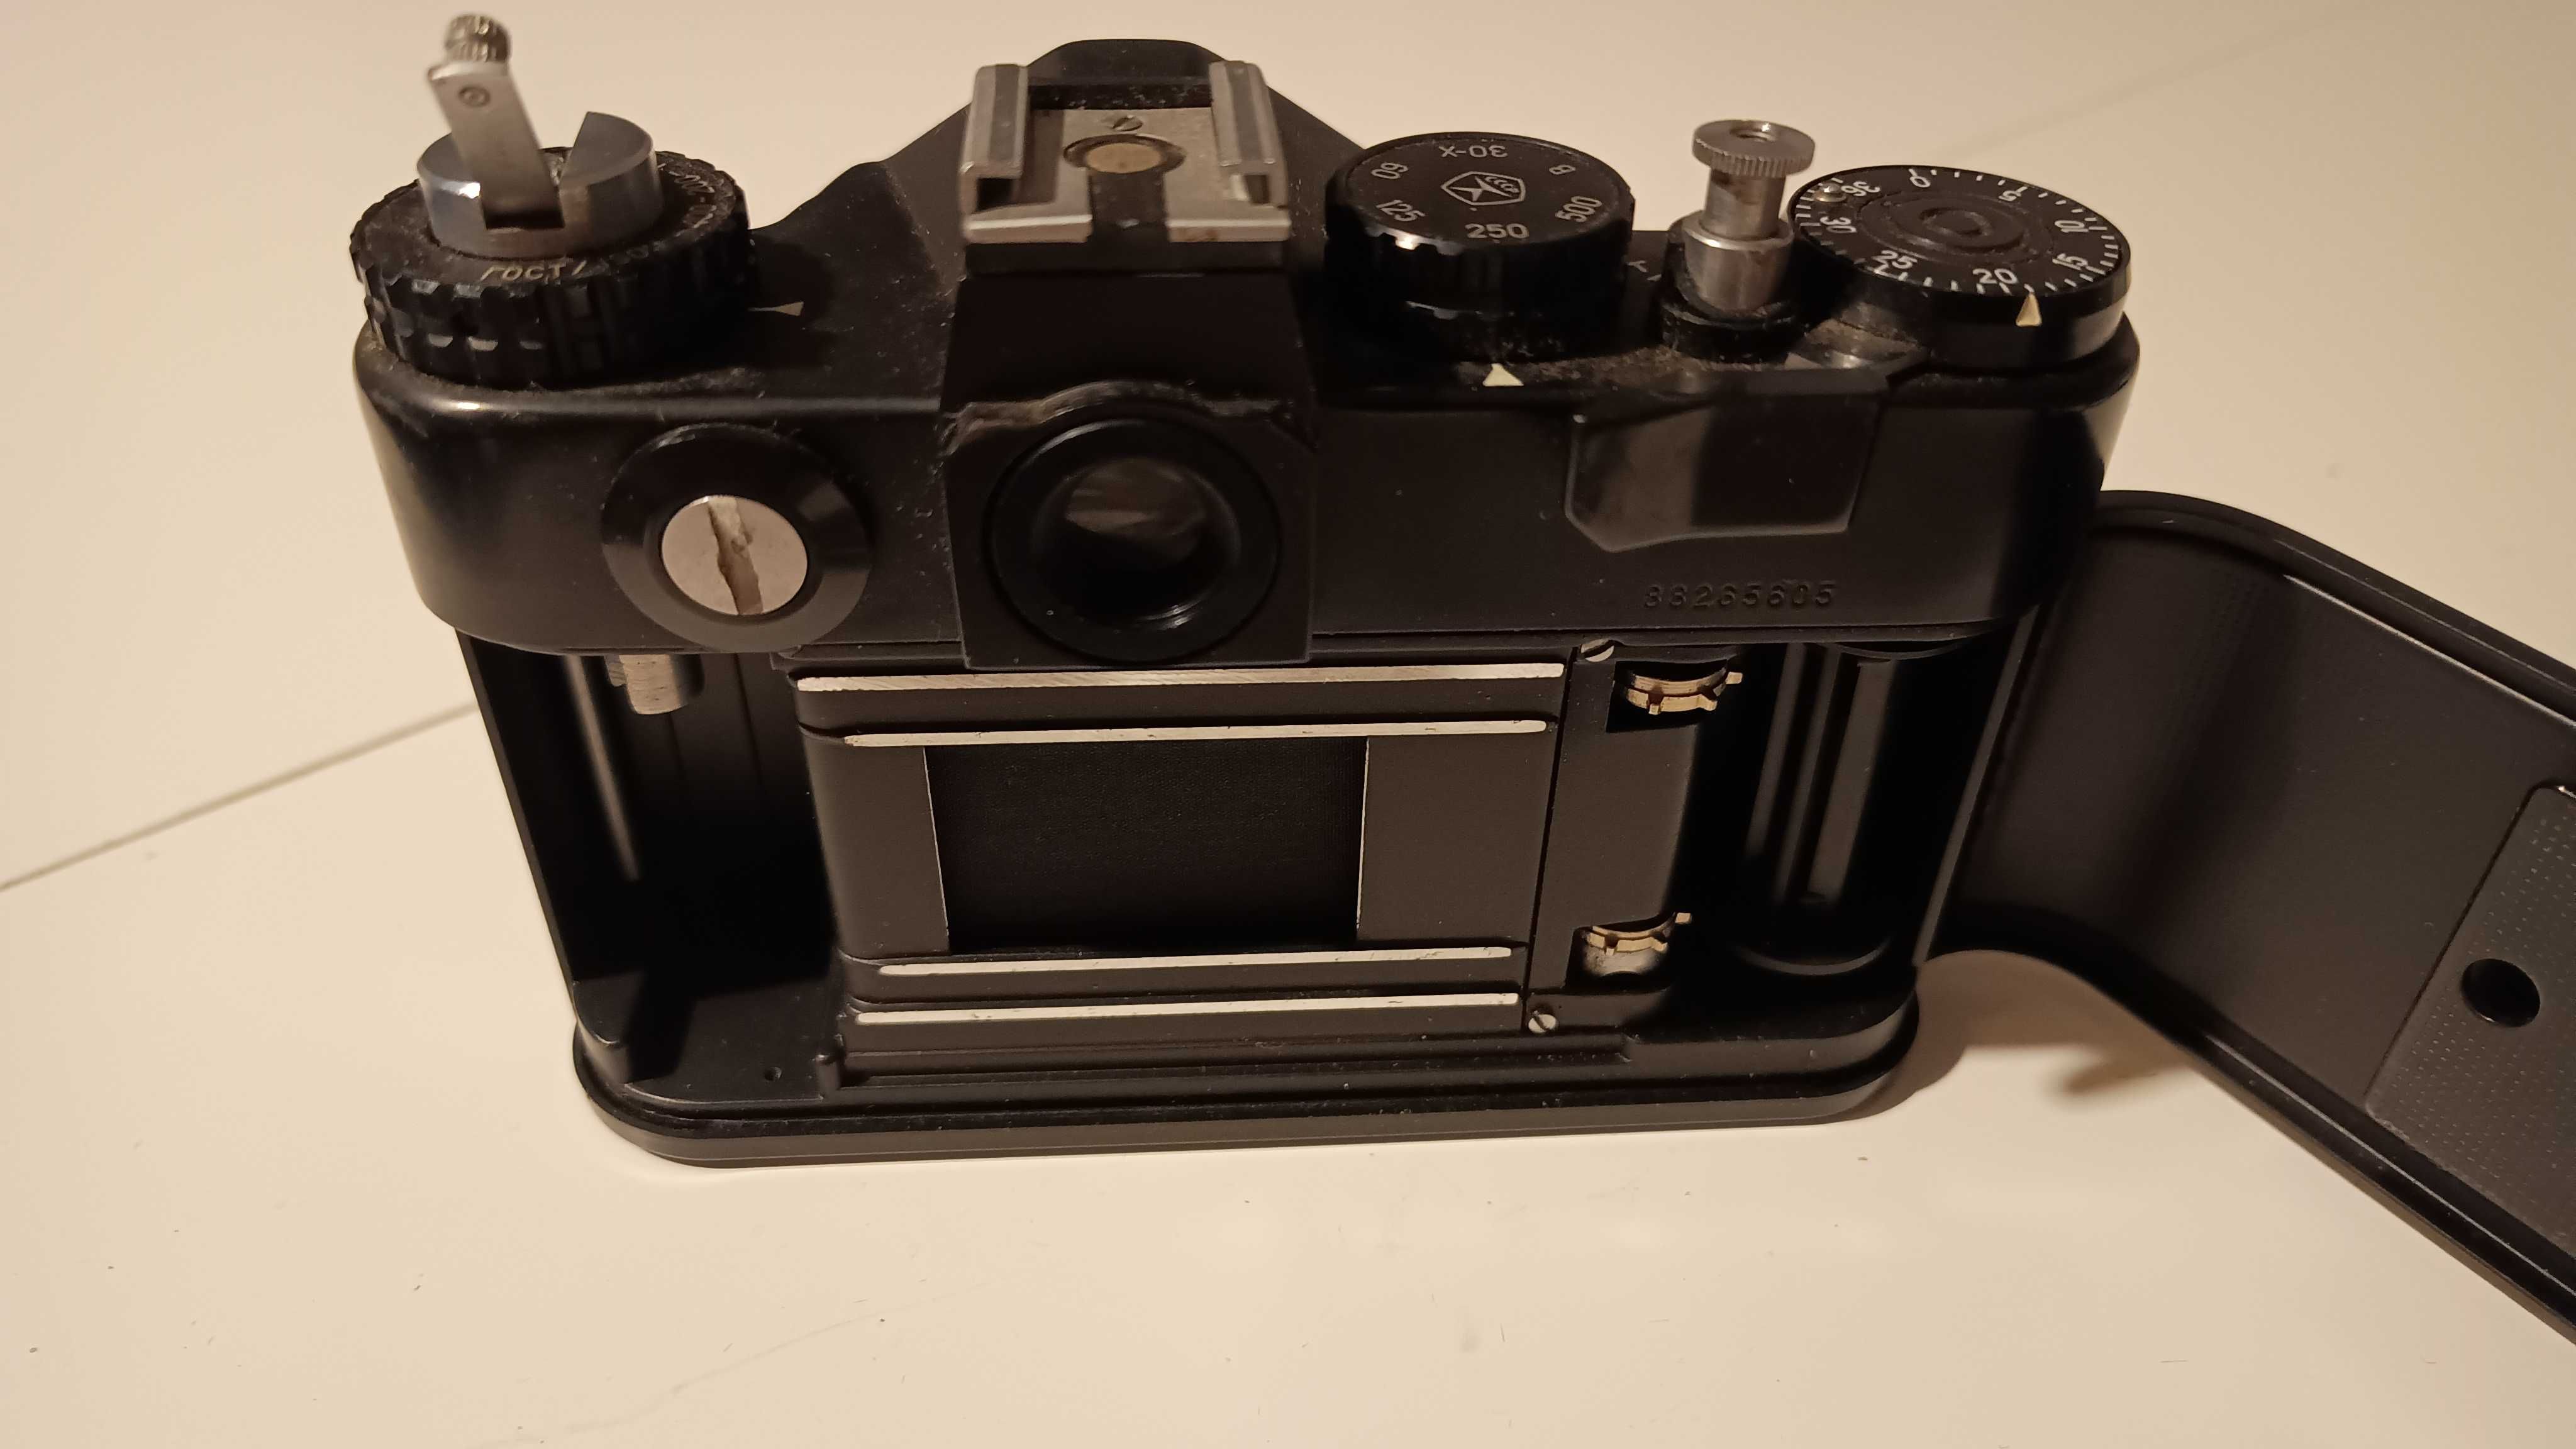 Zenit 12 EA Câmera reflex de lente única (SLR)